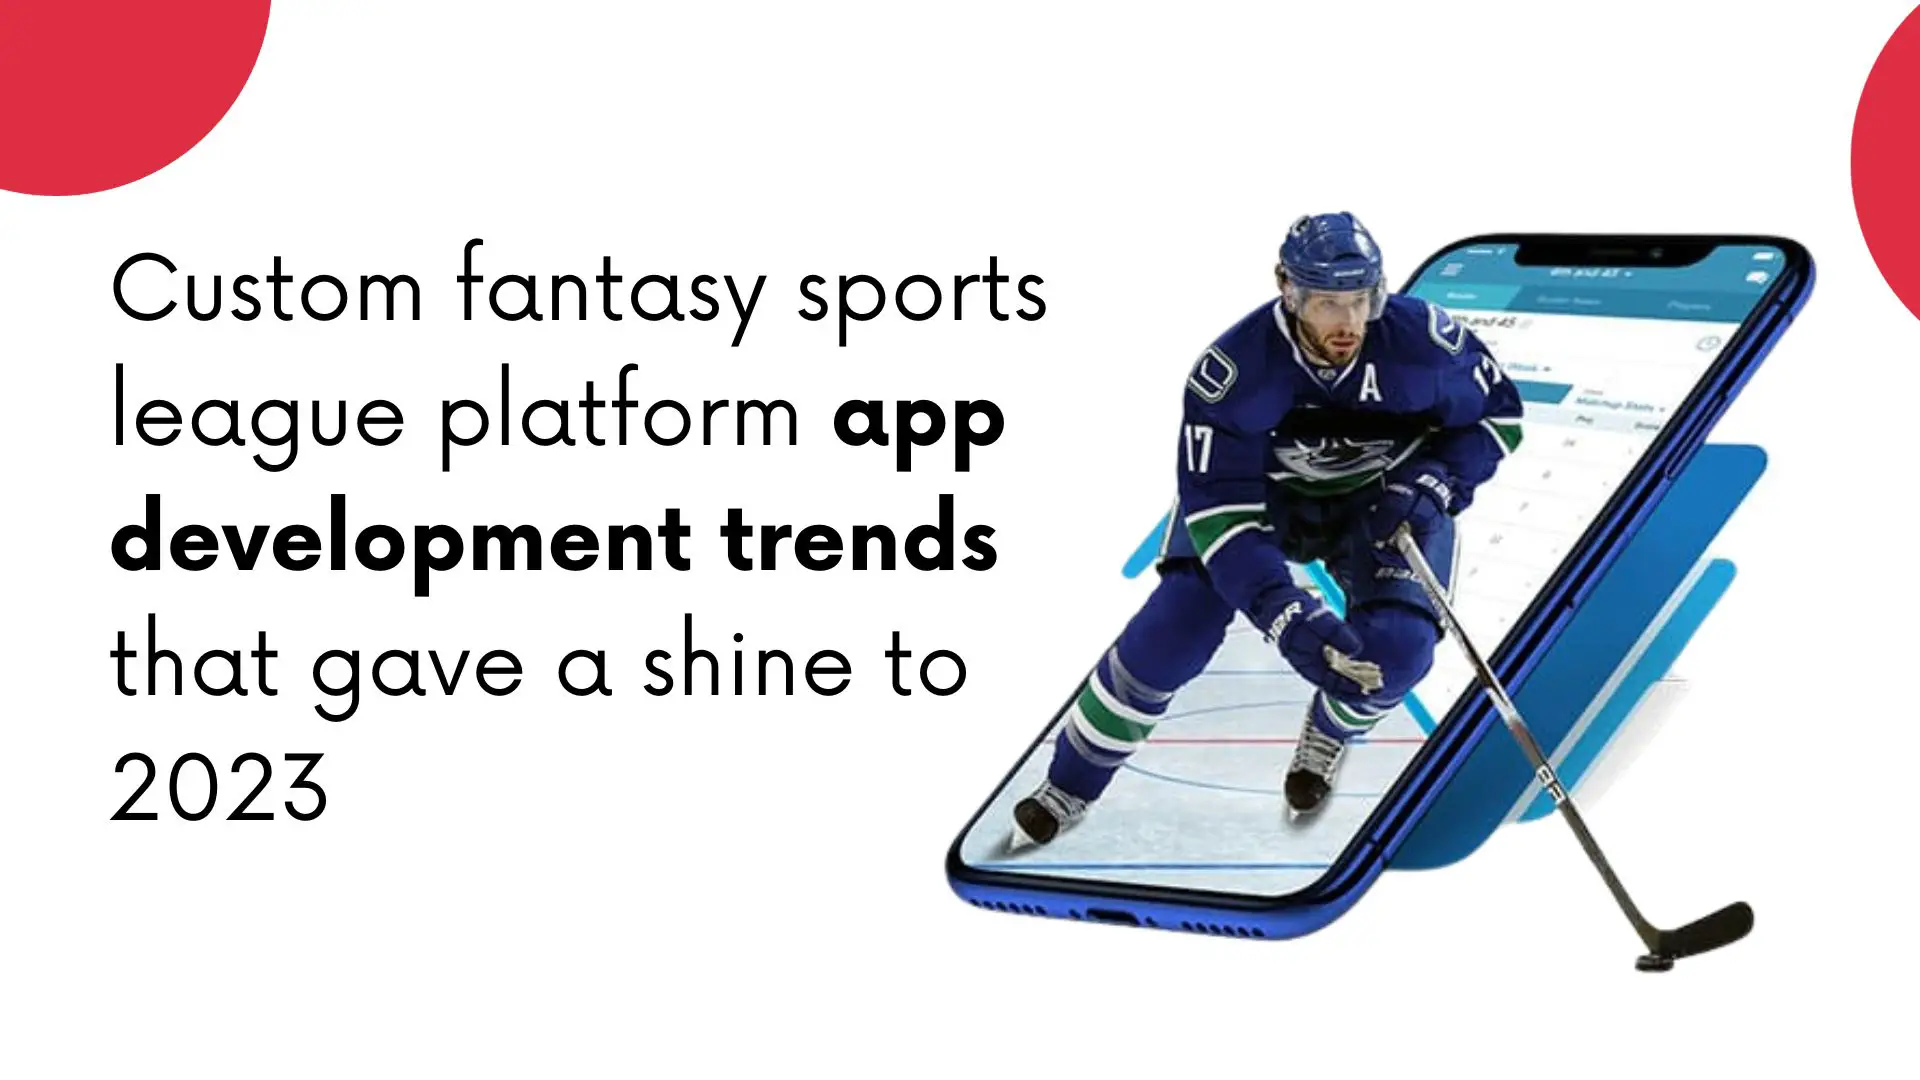 Custom fantasy sports league platform app development trends that gave a shine to 2023